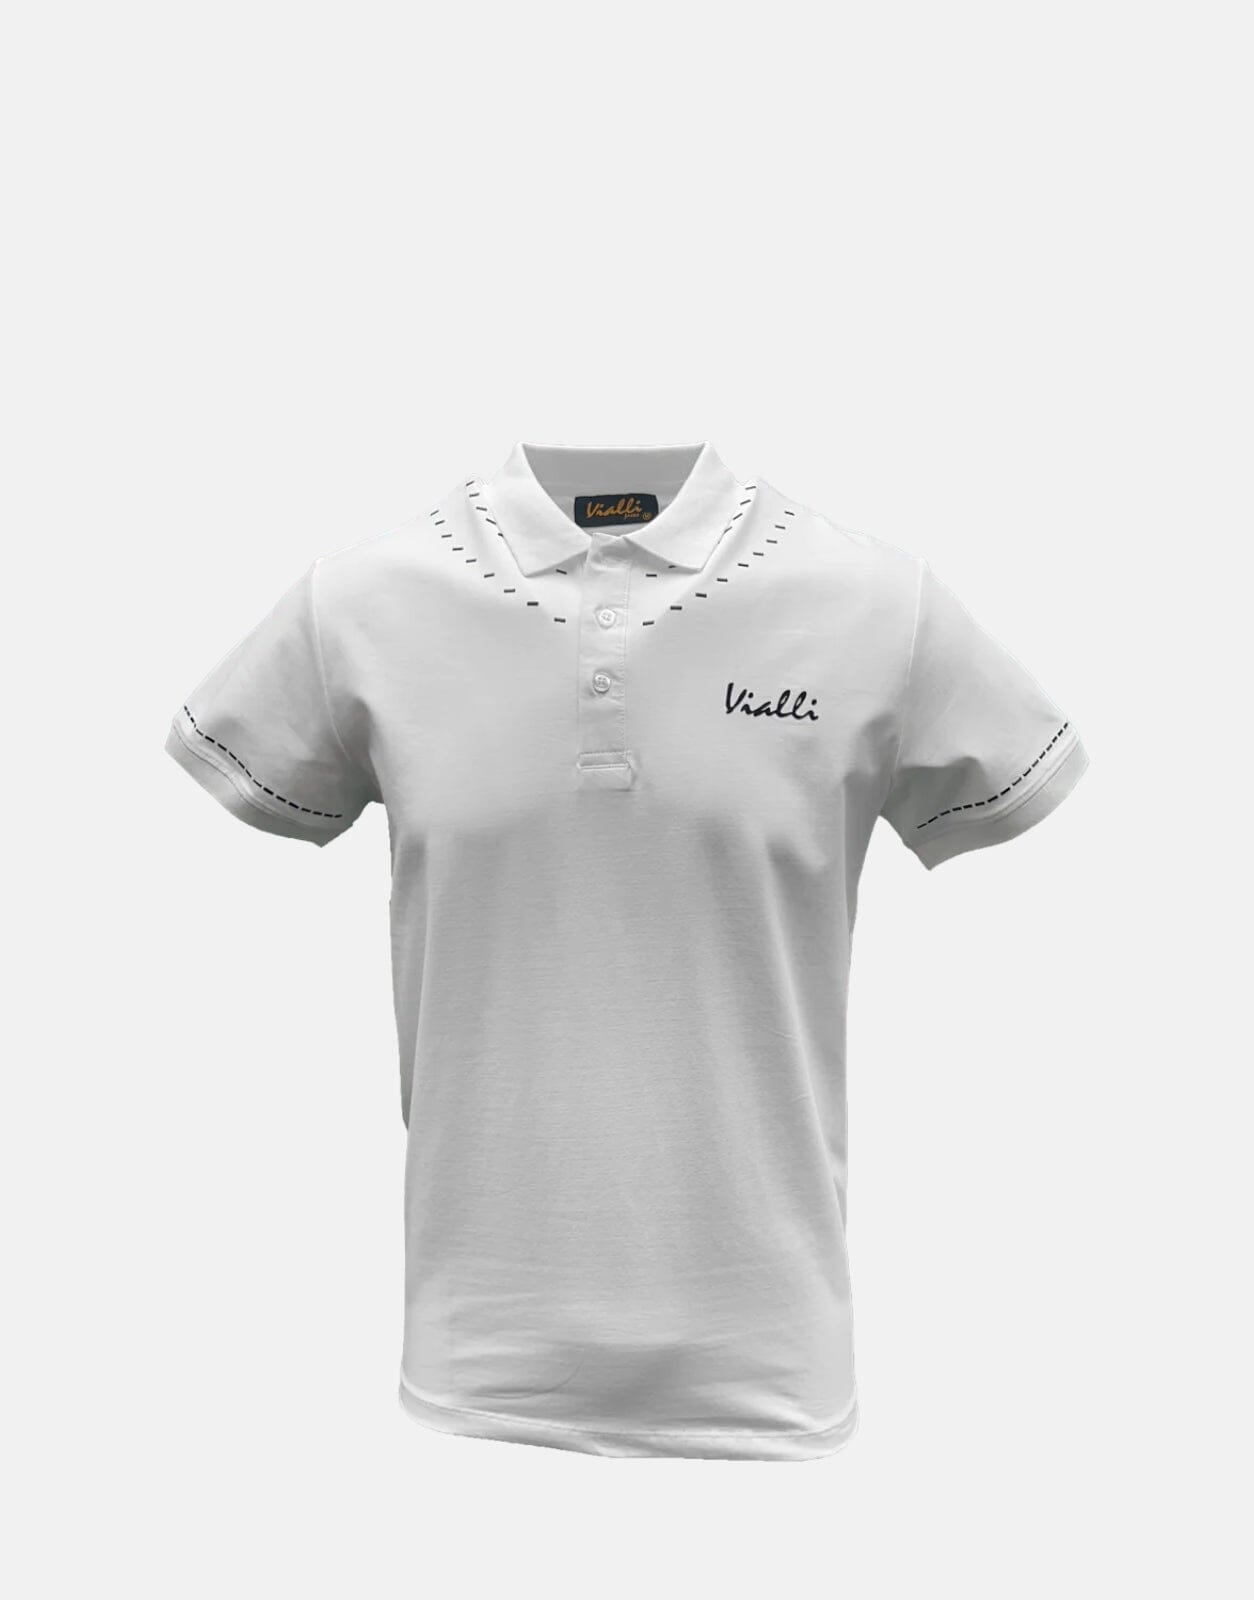 Vialli Flames White Polo Shirt, S / White